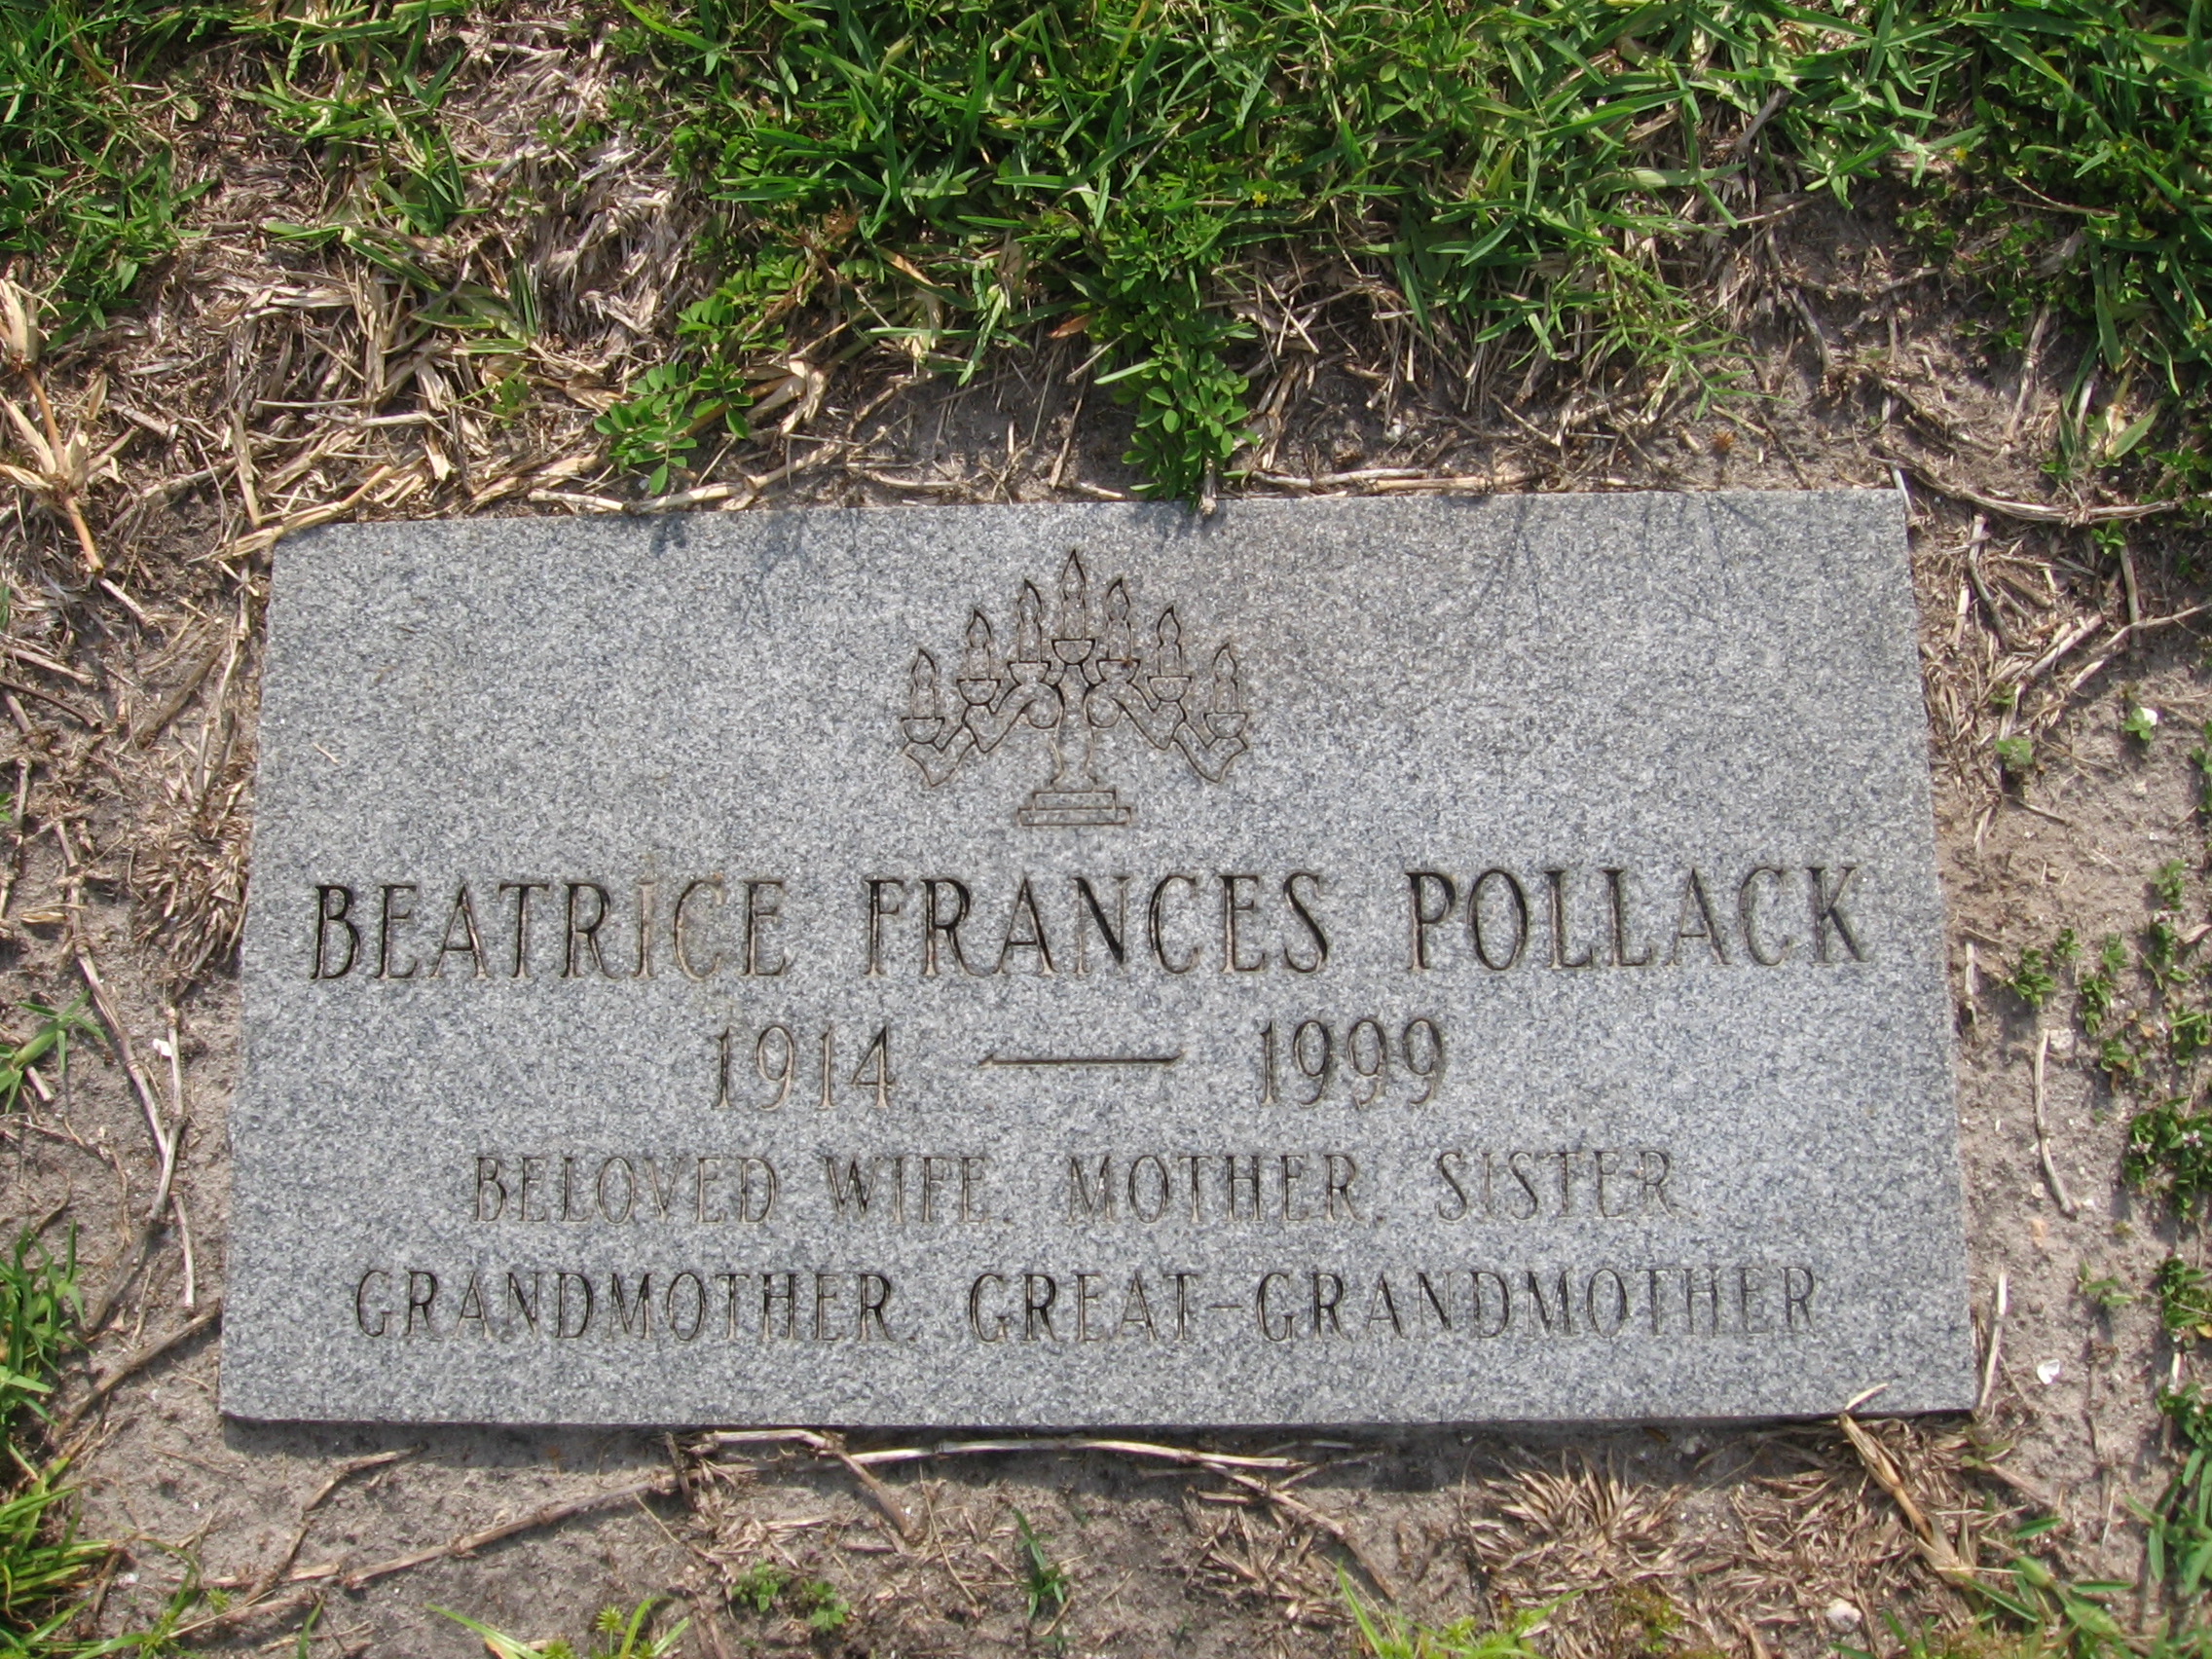 Beatrice Frances Pollack